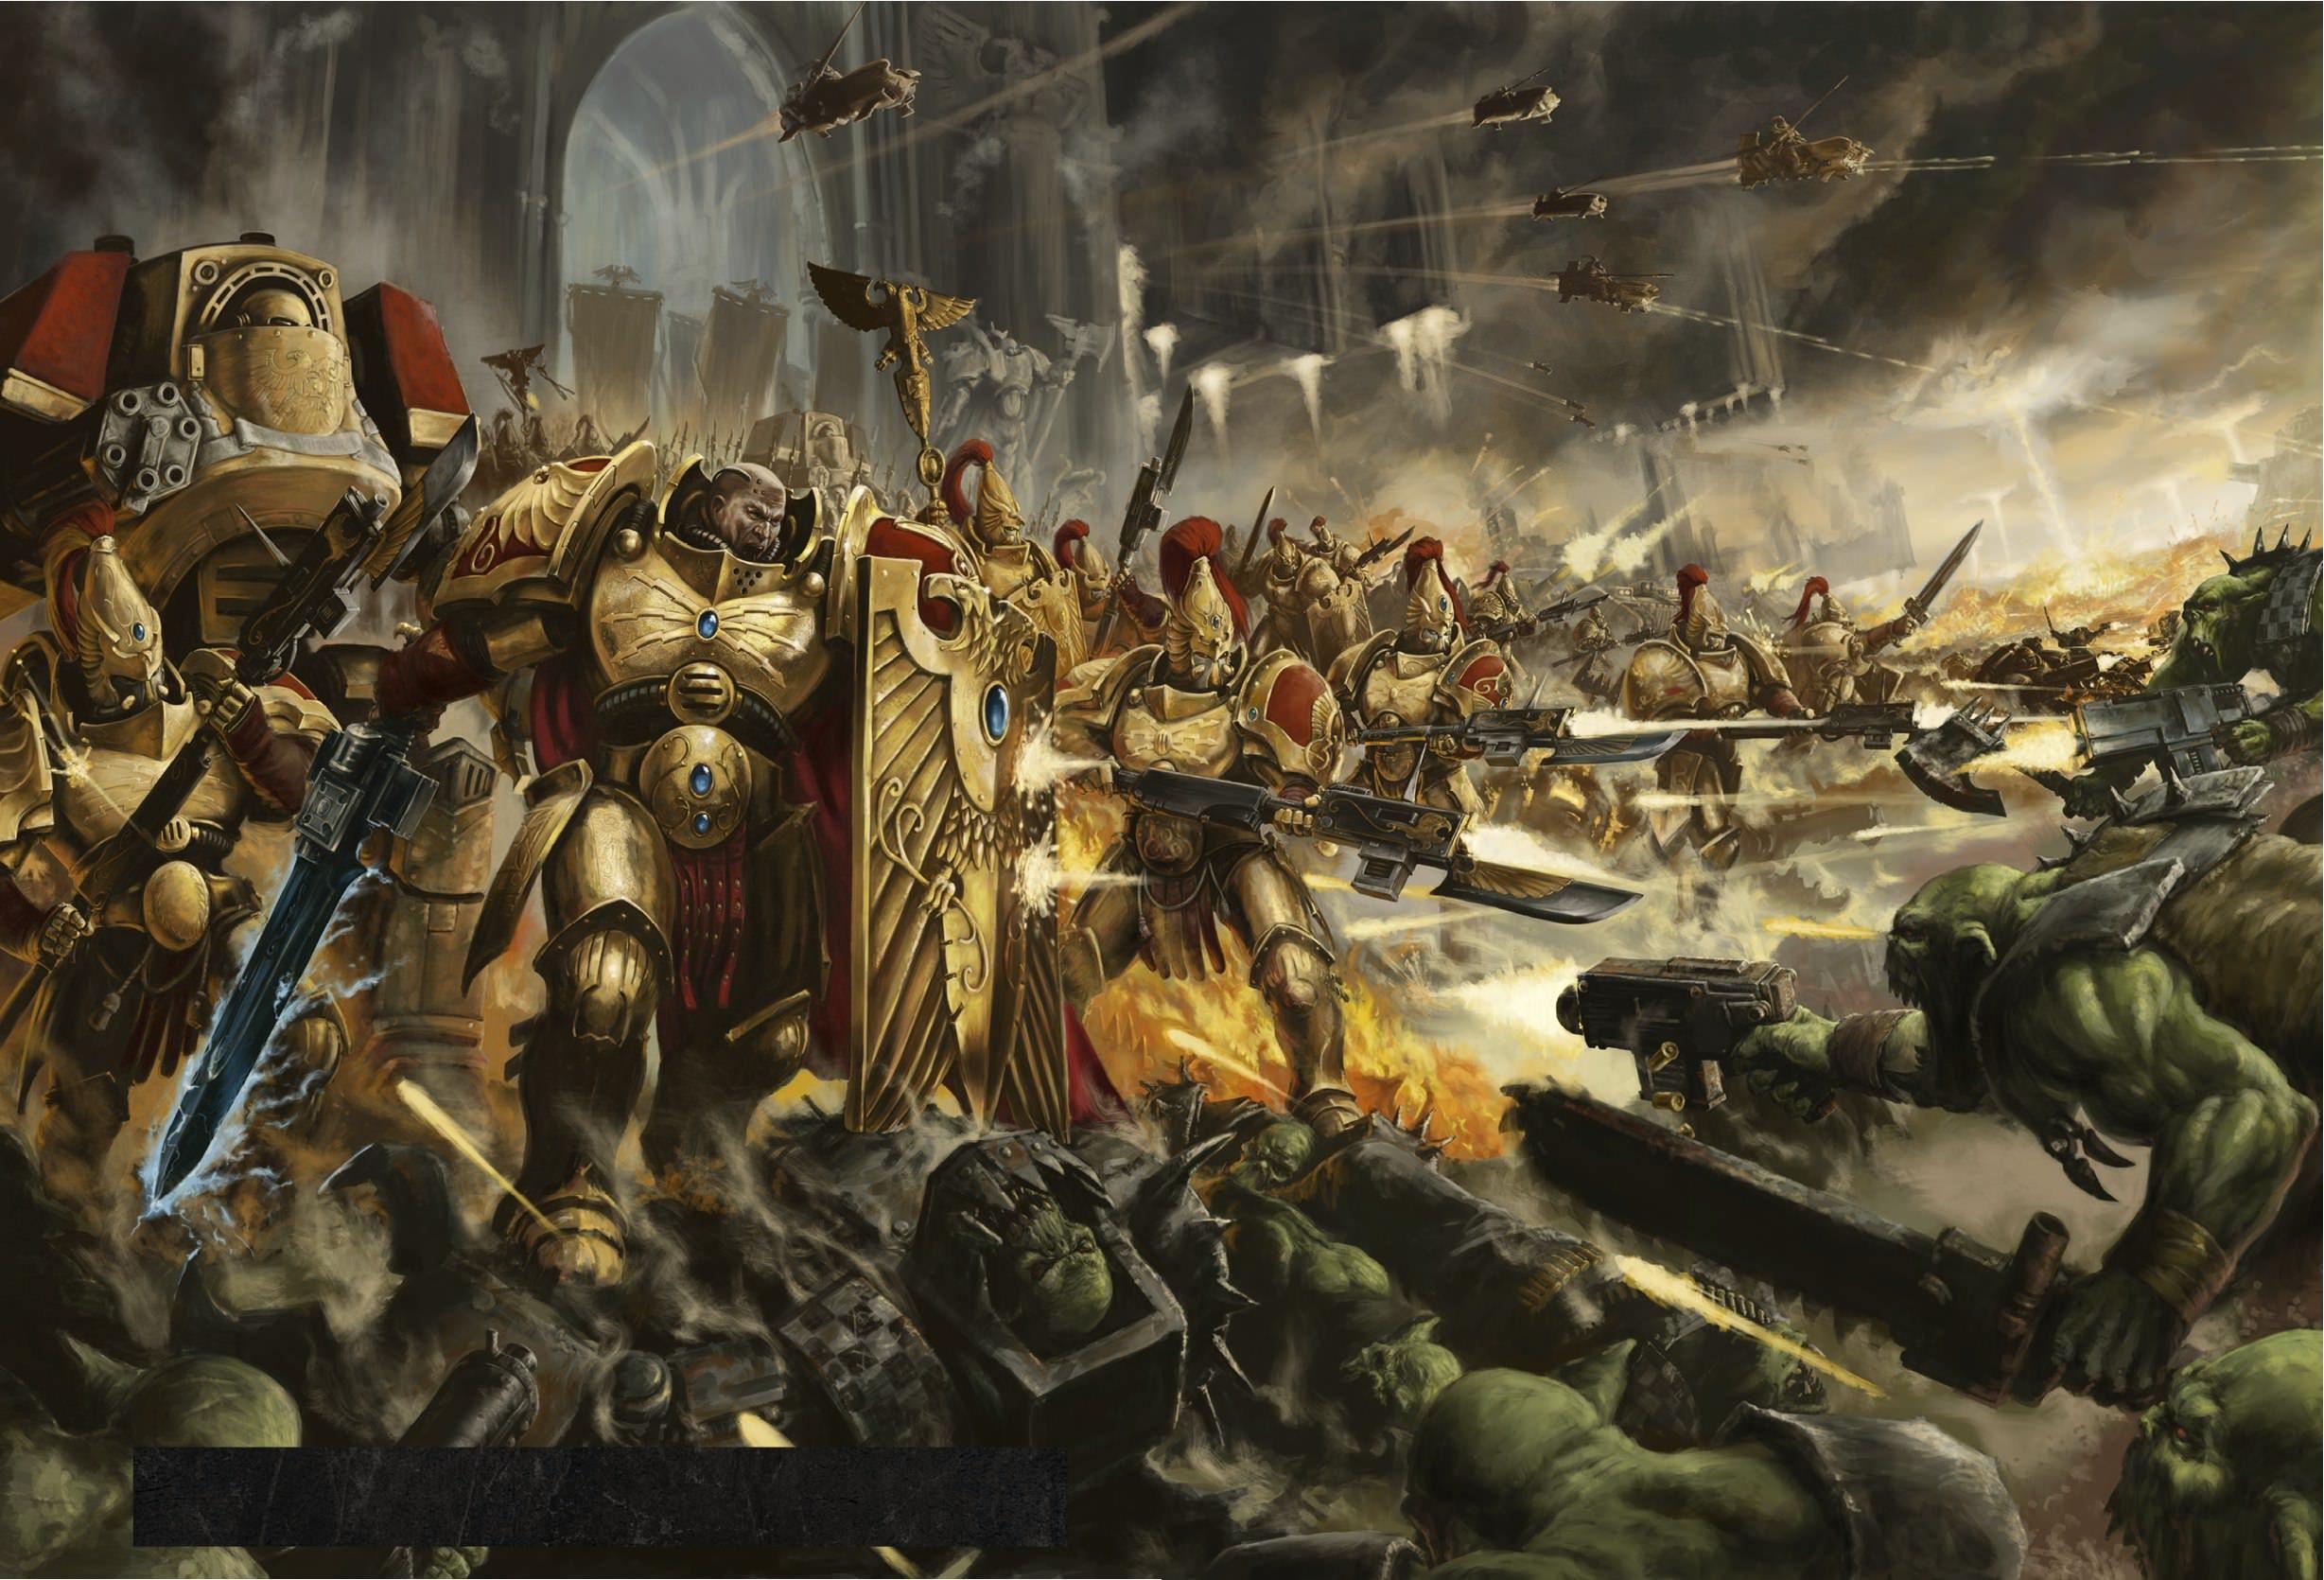 200+] Warhammer Wallpapers | Wallpapers.com